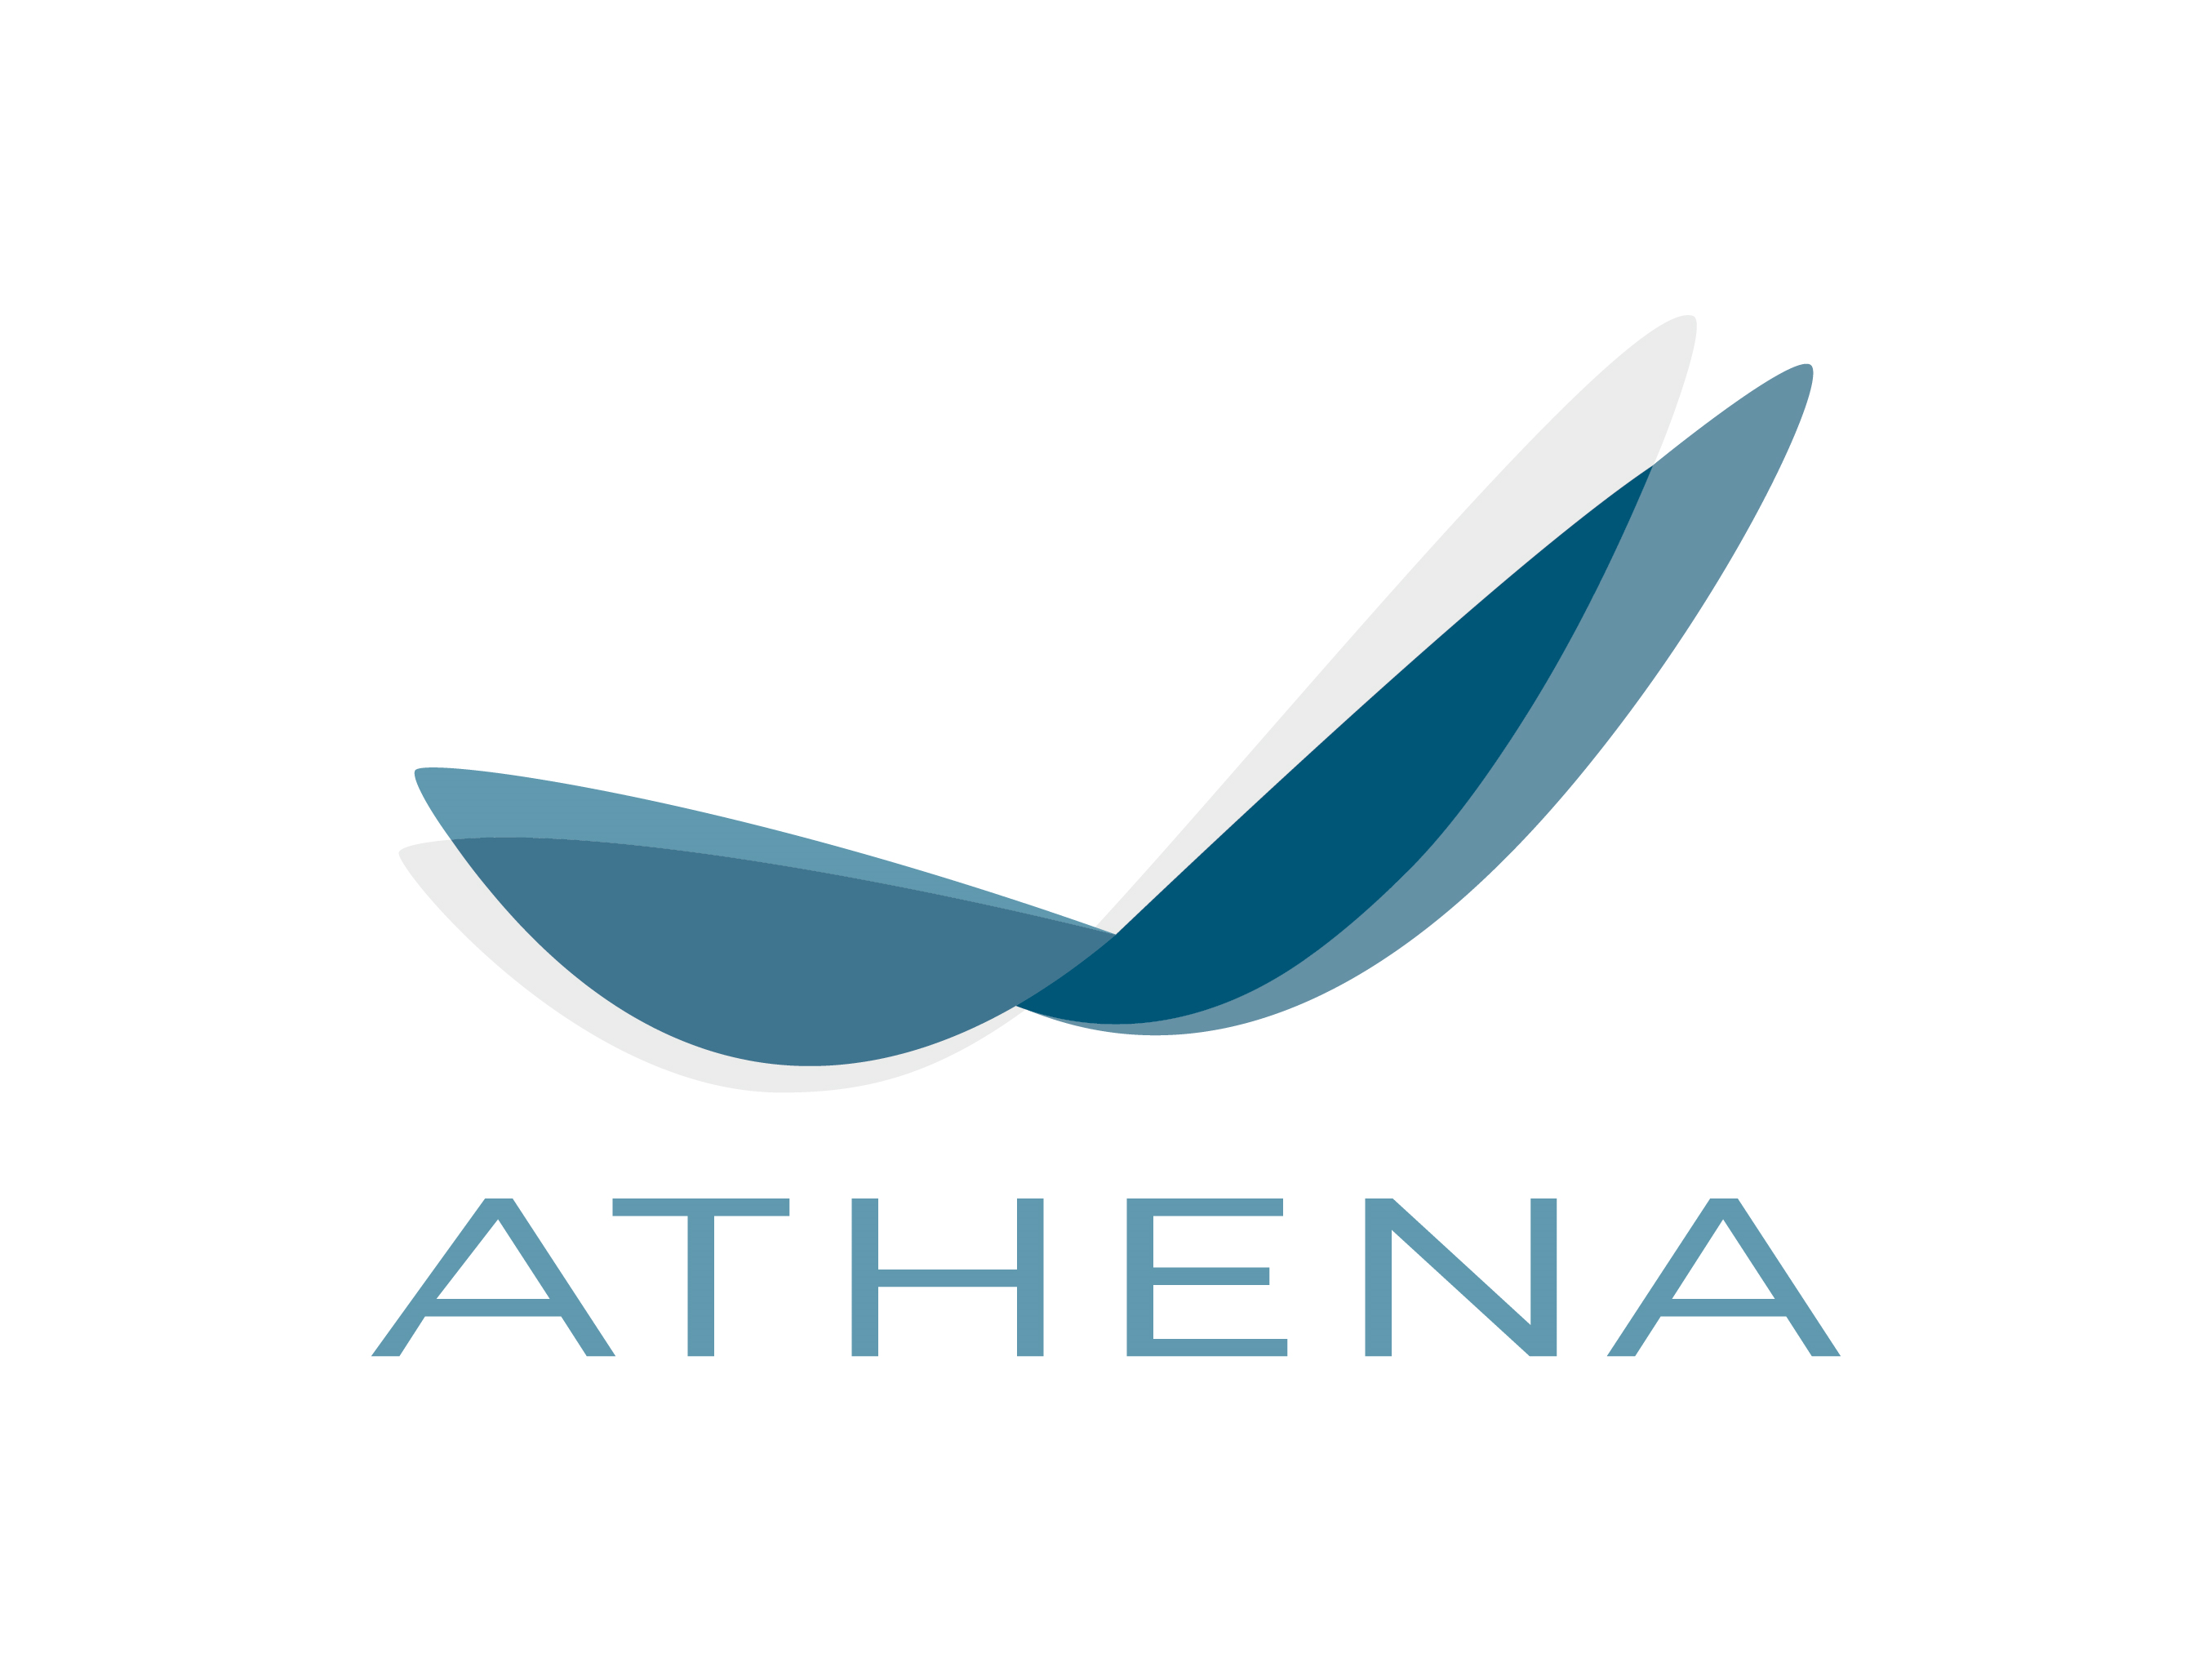 Athena Global Advisors logo